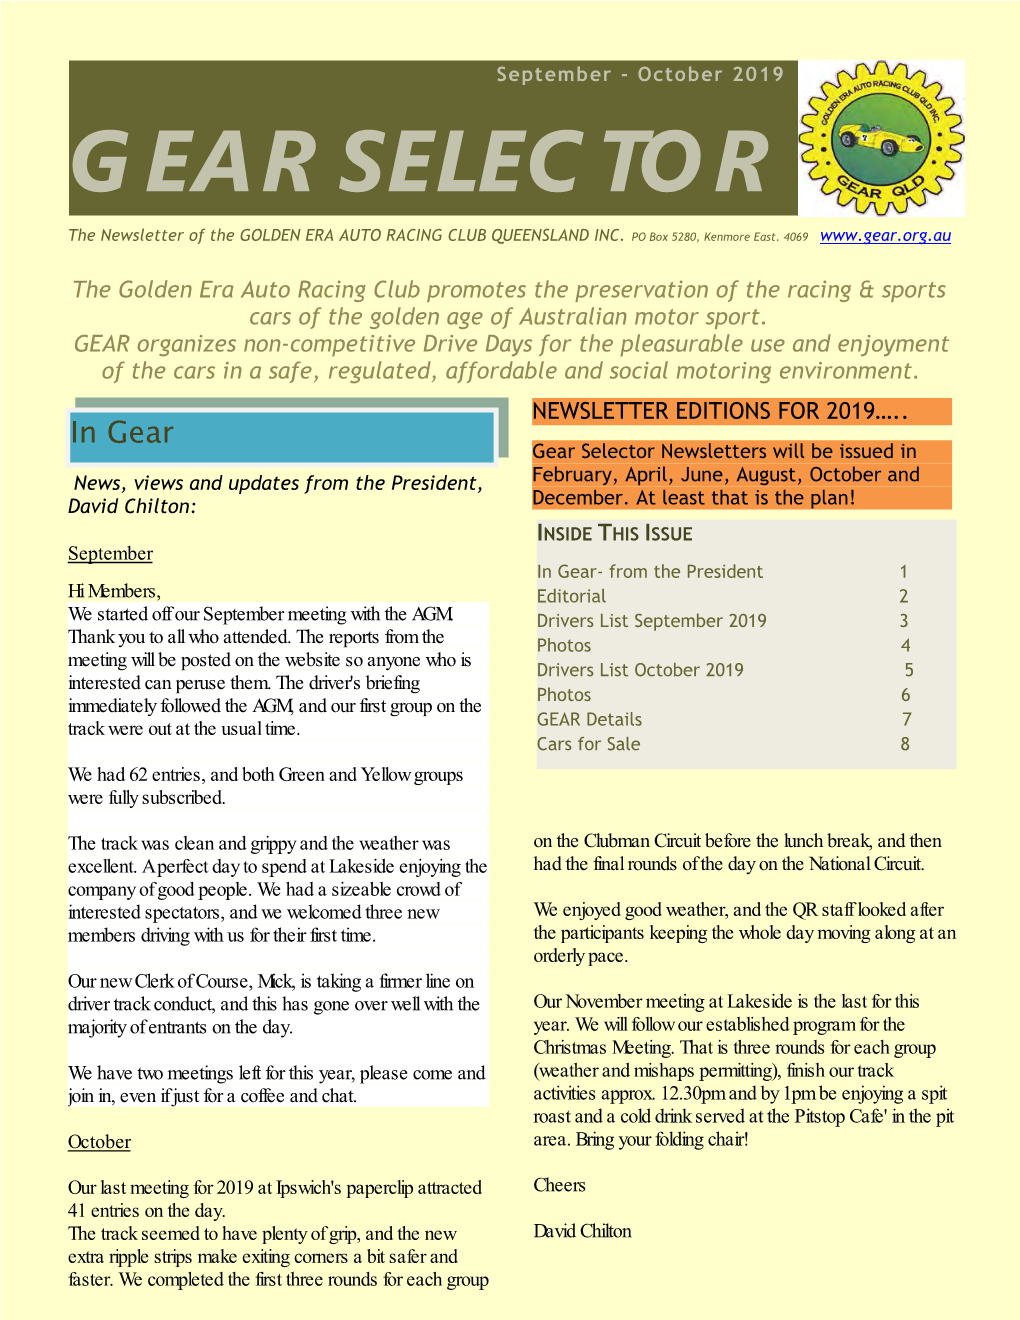 Gear Selector